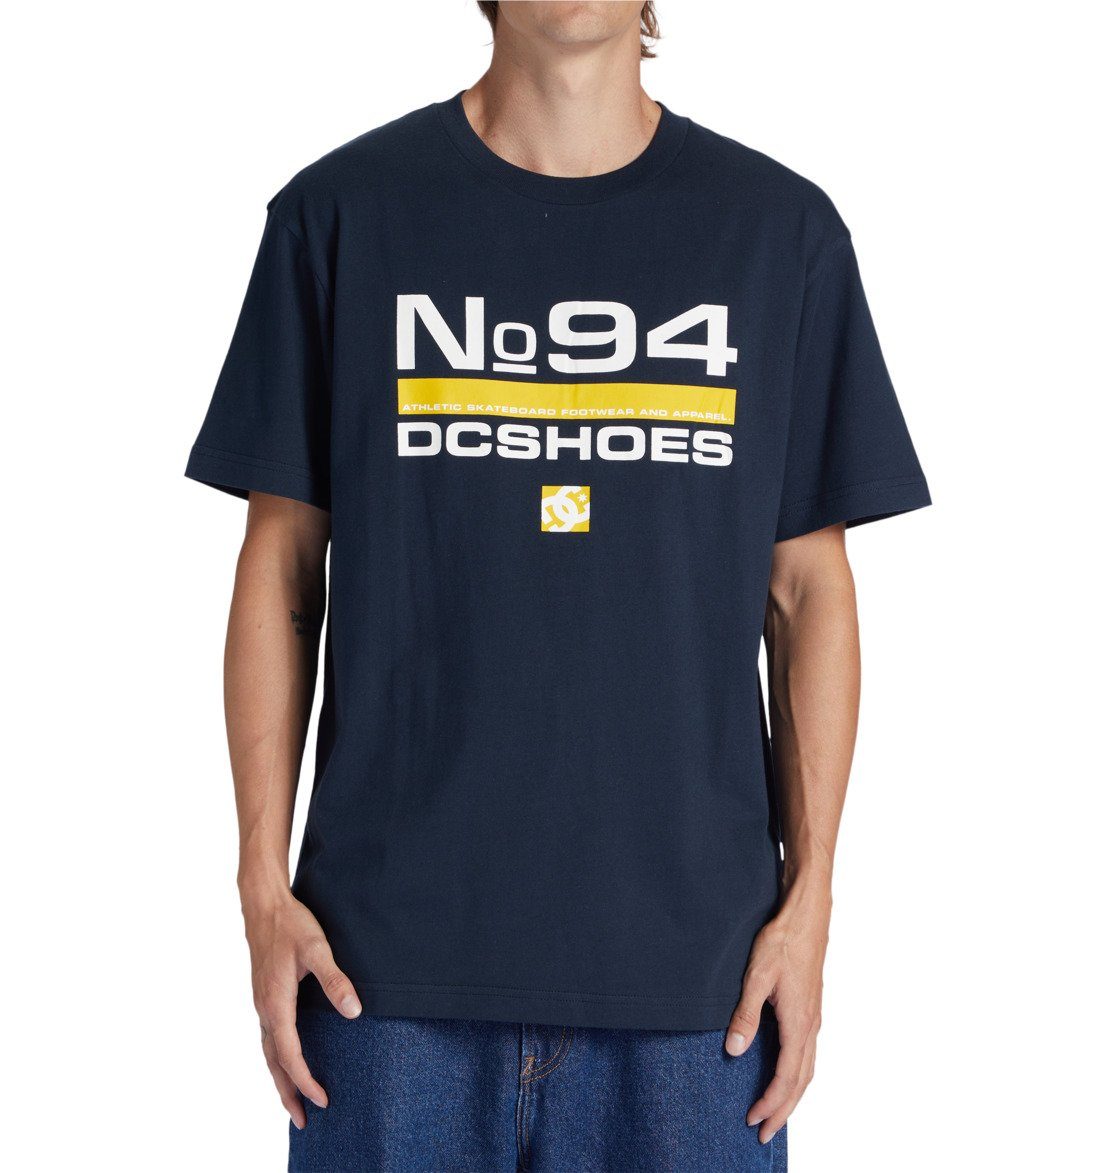 DC Shoes T-Shirt Nine Four Navy Blazer